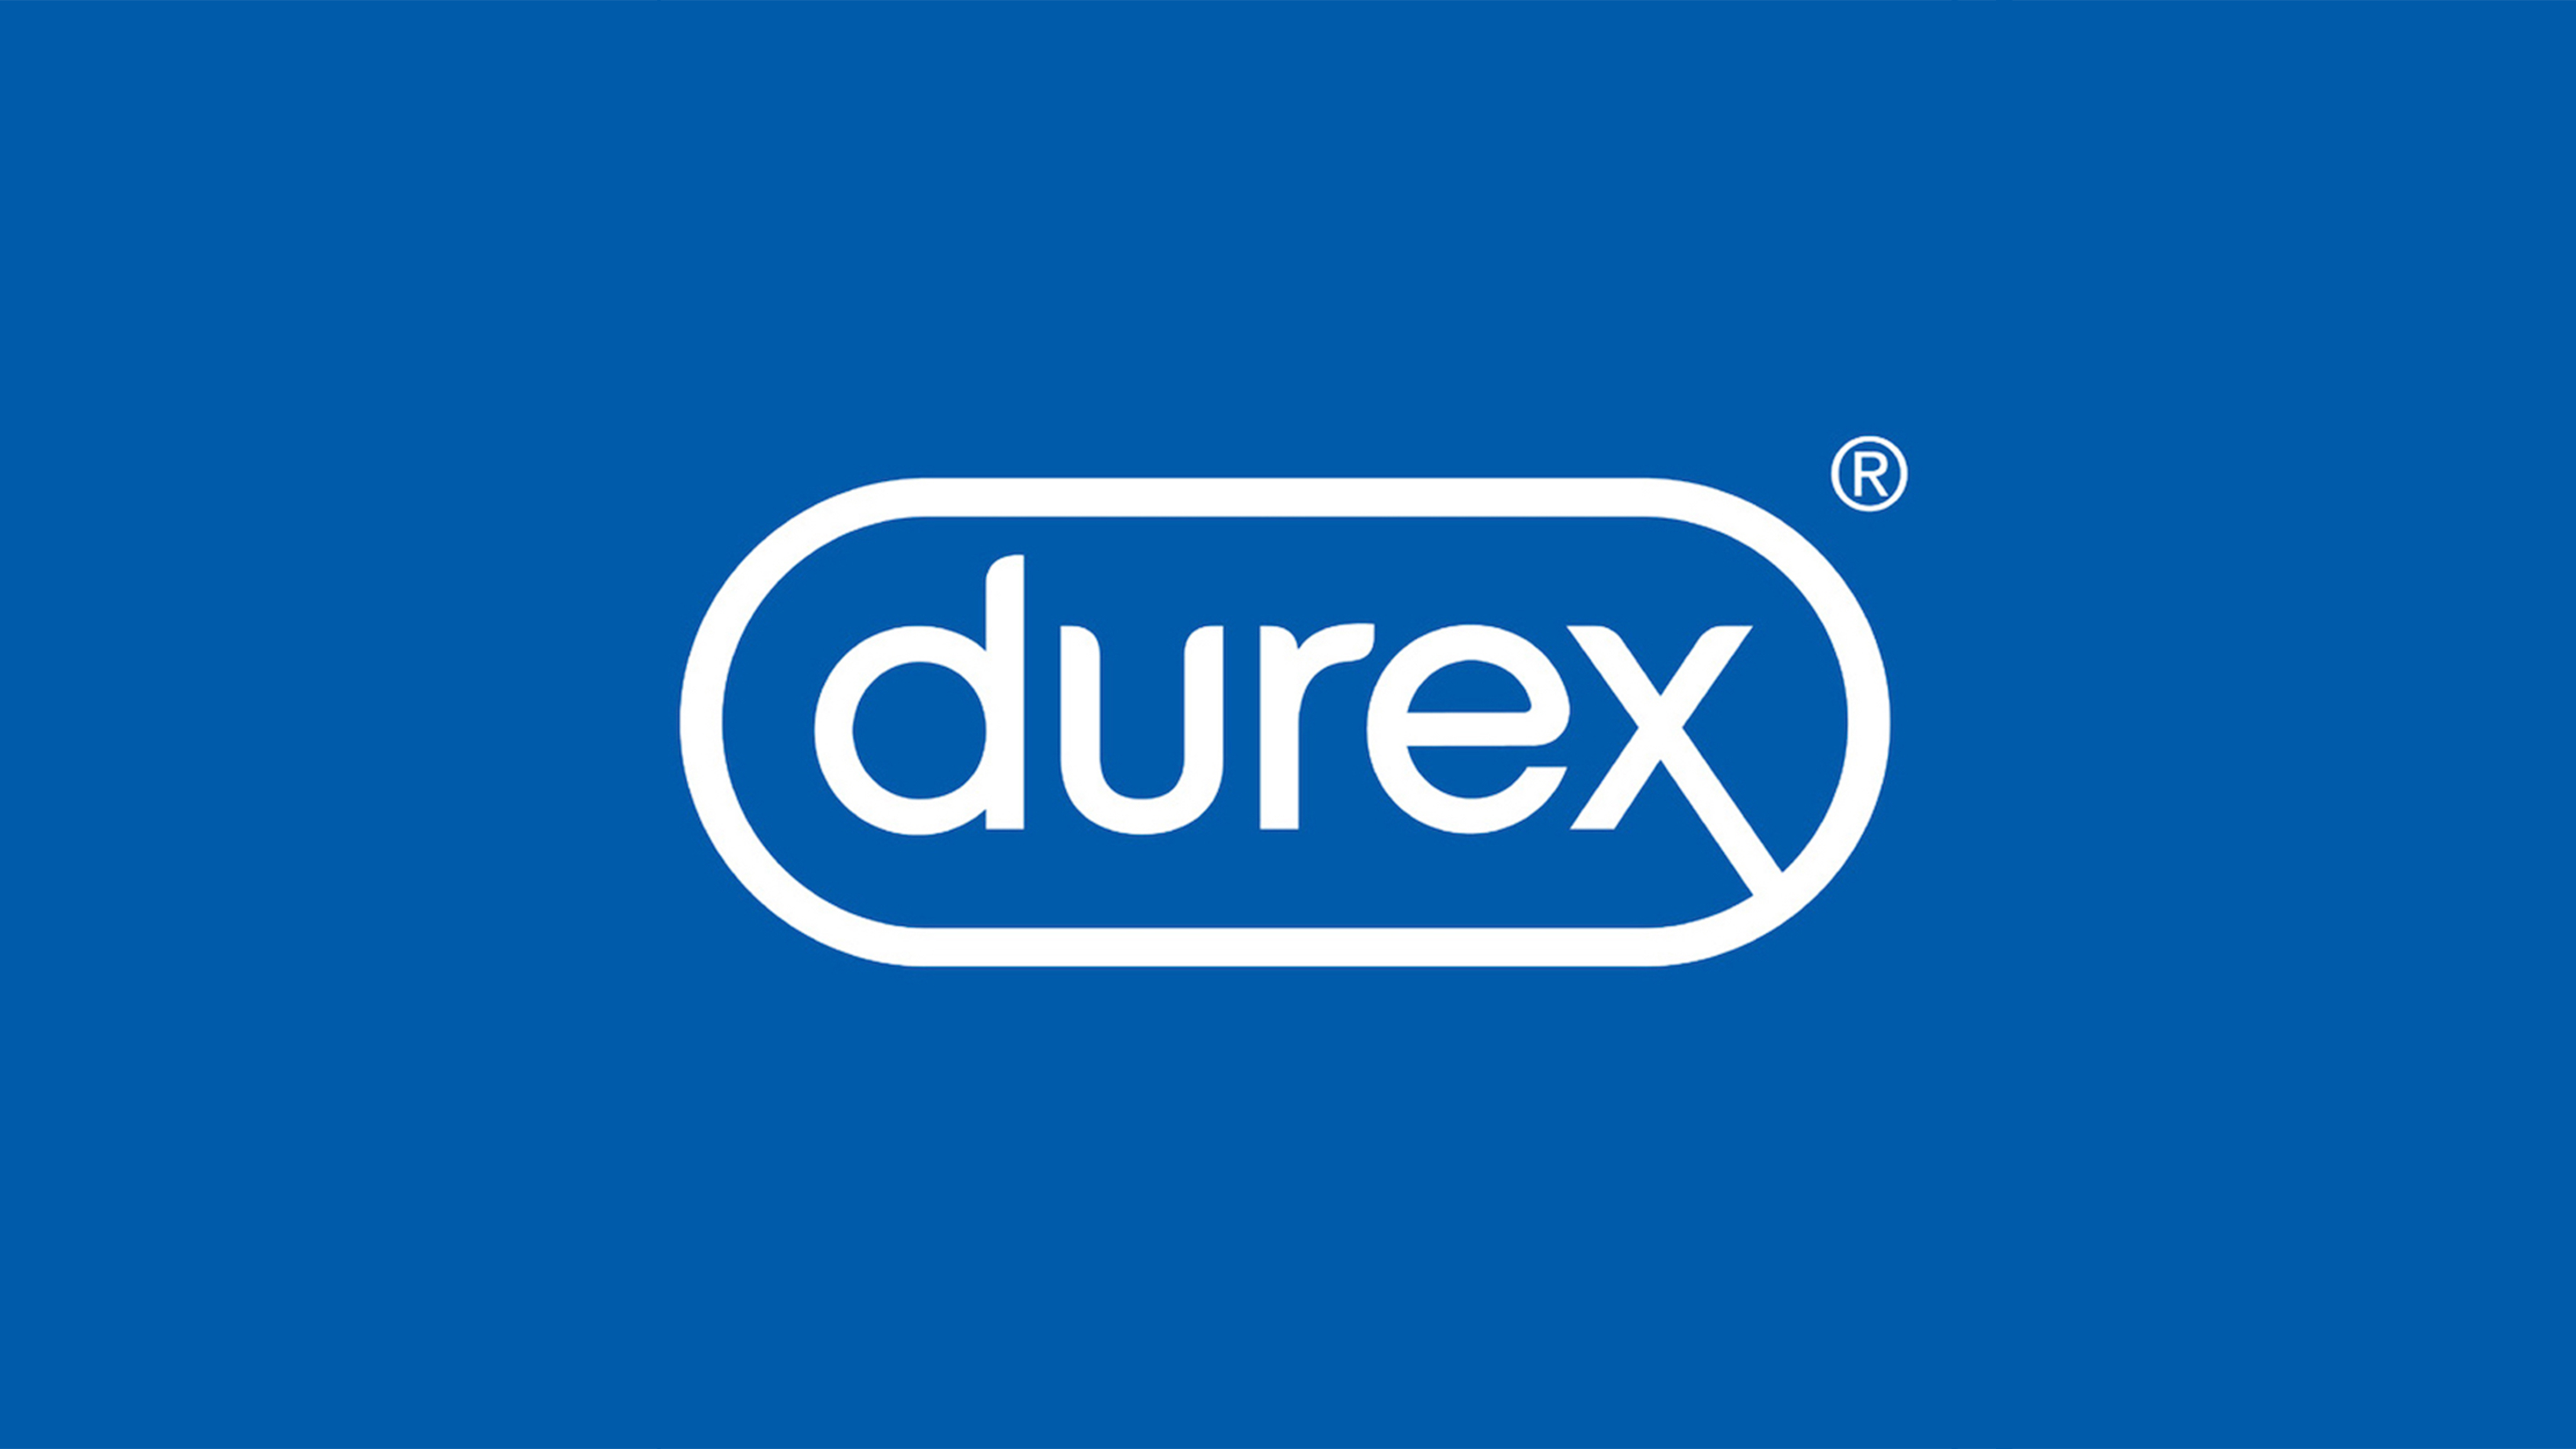 Durex Coupons & Promo Codes